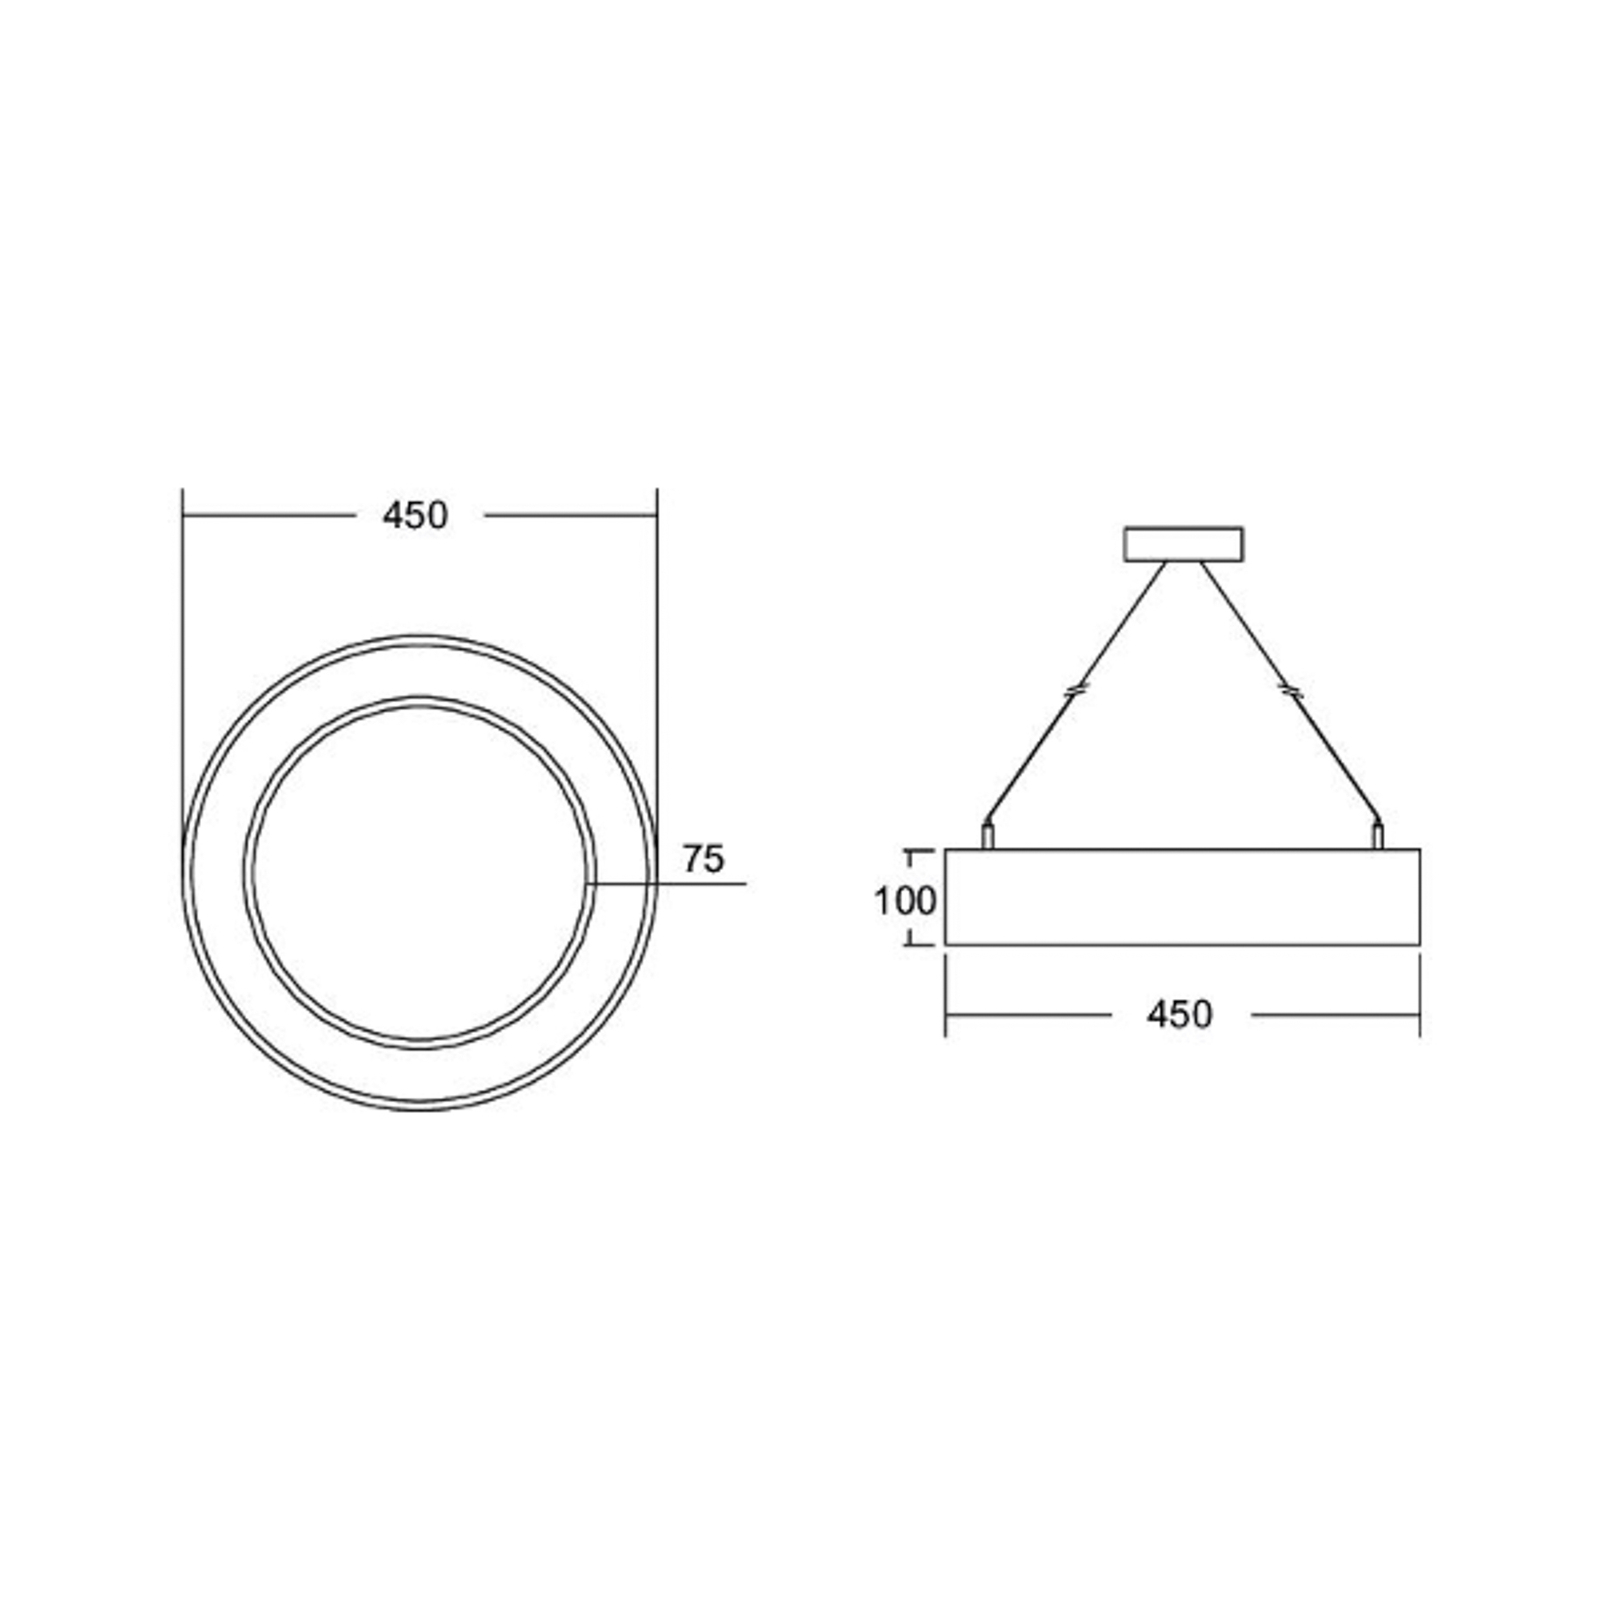 BRUMBERG Biro Circle Ring10 direkte CCT DALI, Ø 45 cm, sølv